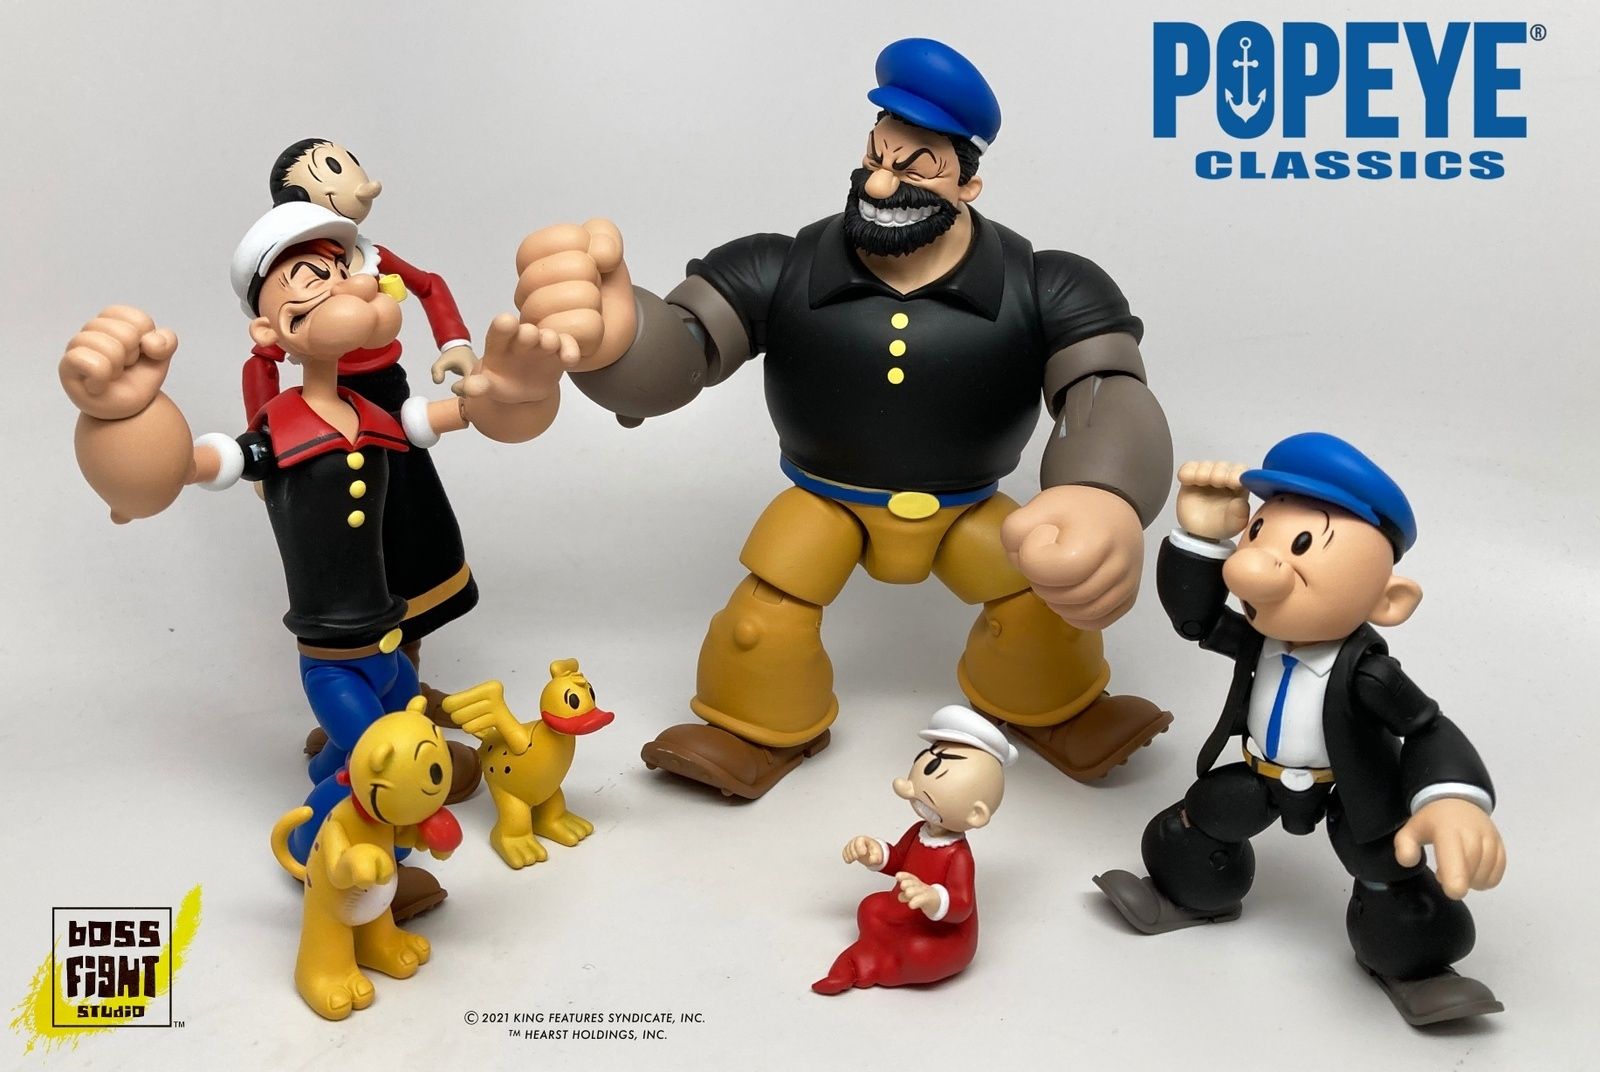 The Popeye gang, from Boss Fight Studio's Popeye Classics toyline.